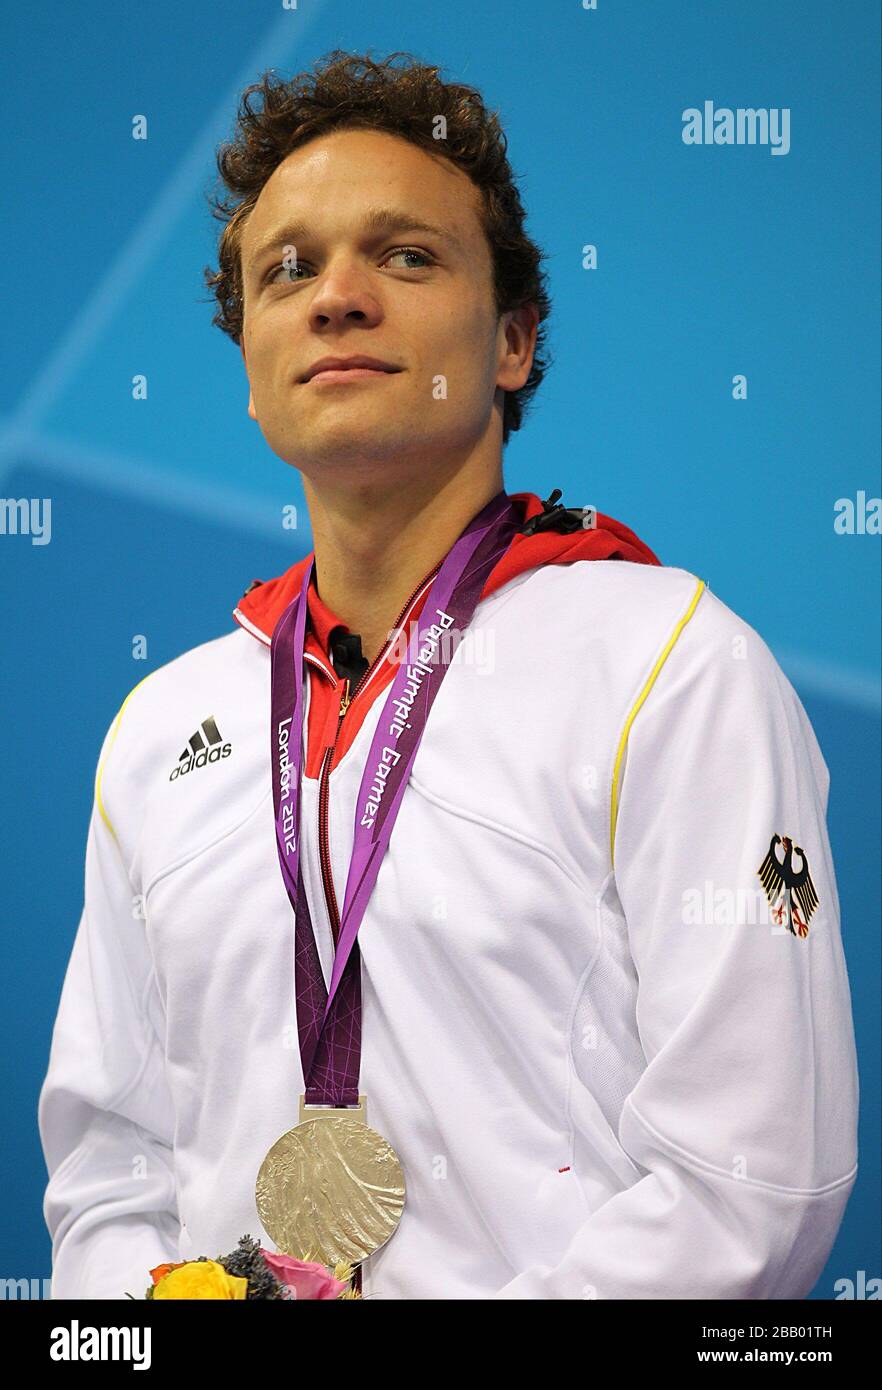 Silver Medalist Germany's Torben Schmidtke after the Men's 100m Breaststroke - SB6 Final at the Aquatics Centre, London. Stock Photo